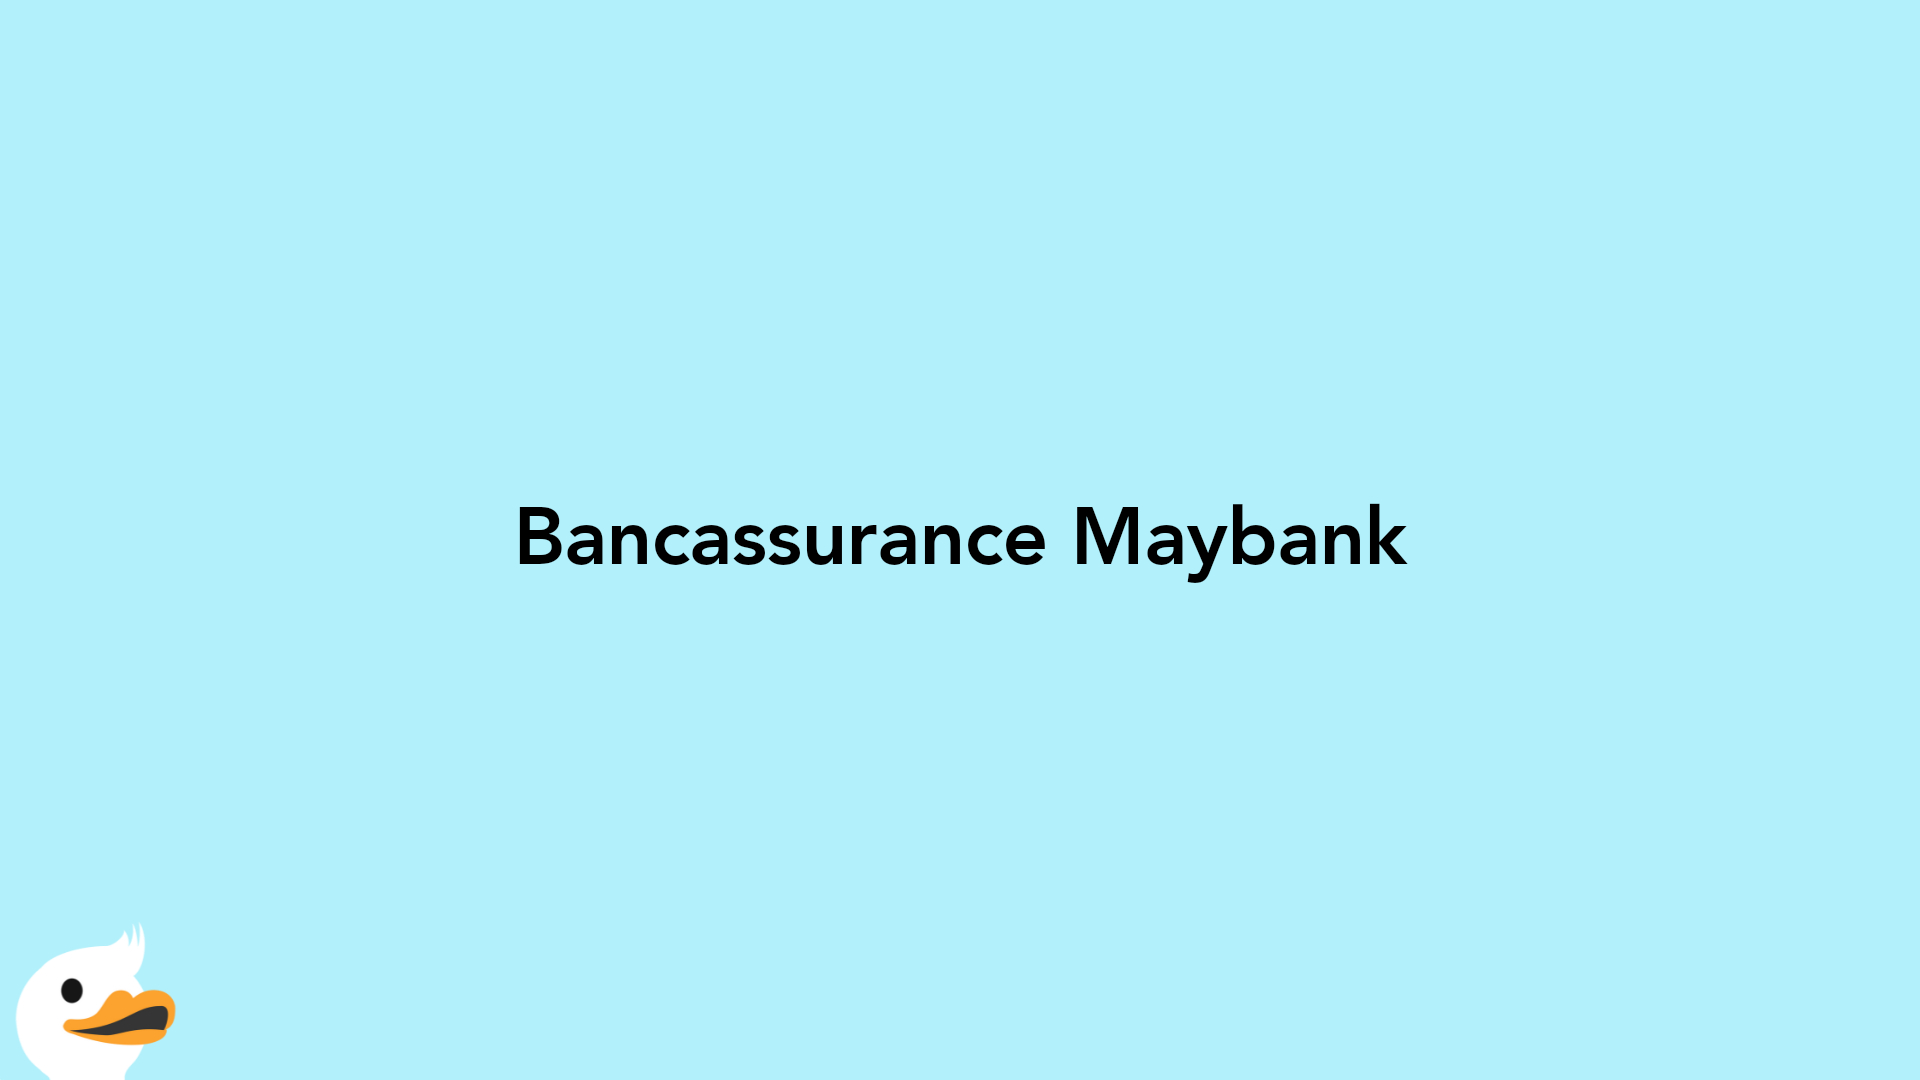 Bancassurance Maybank